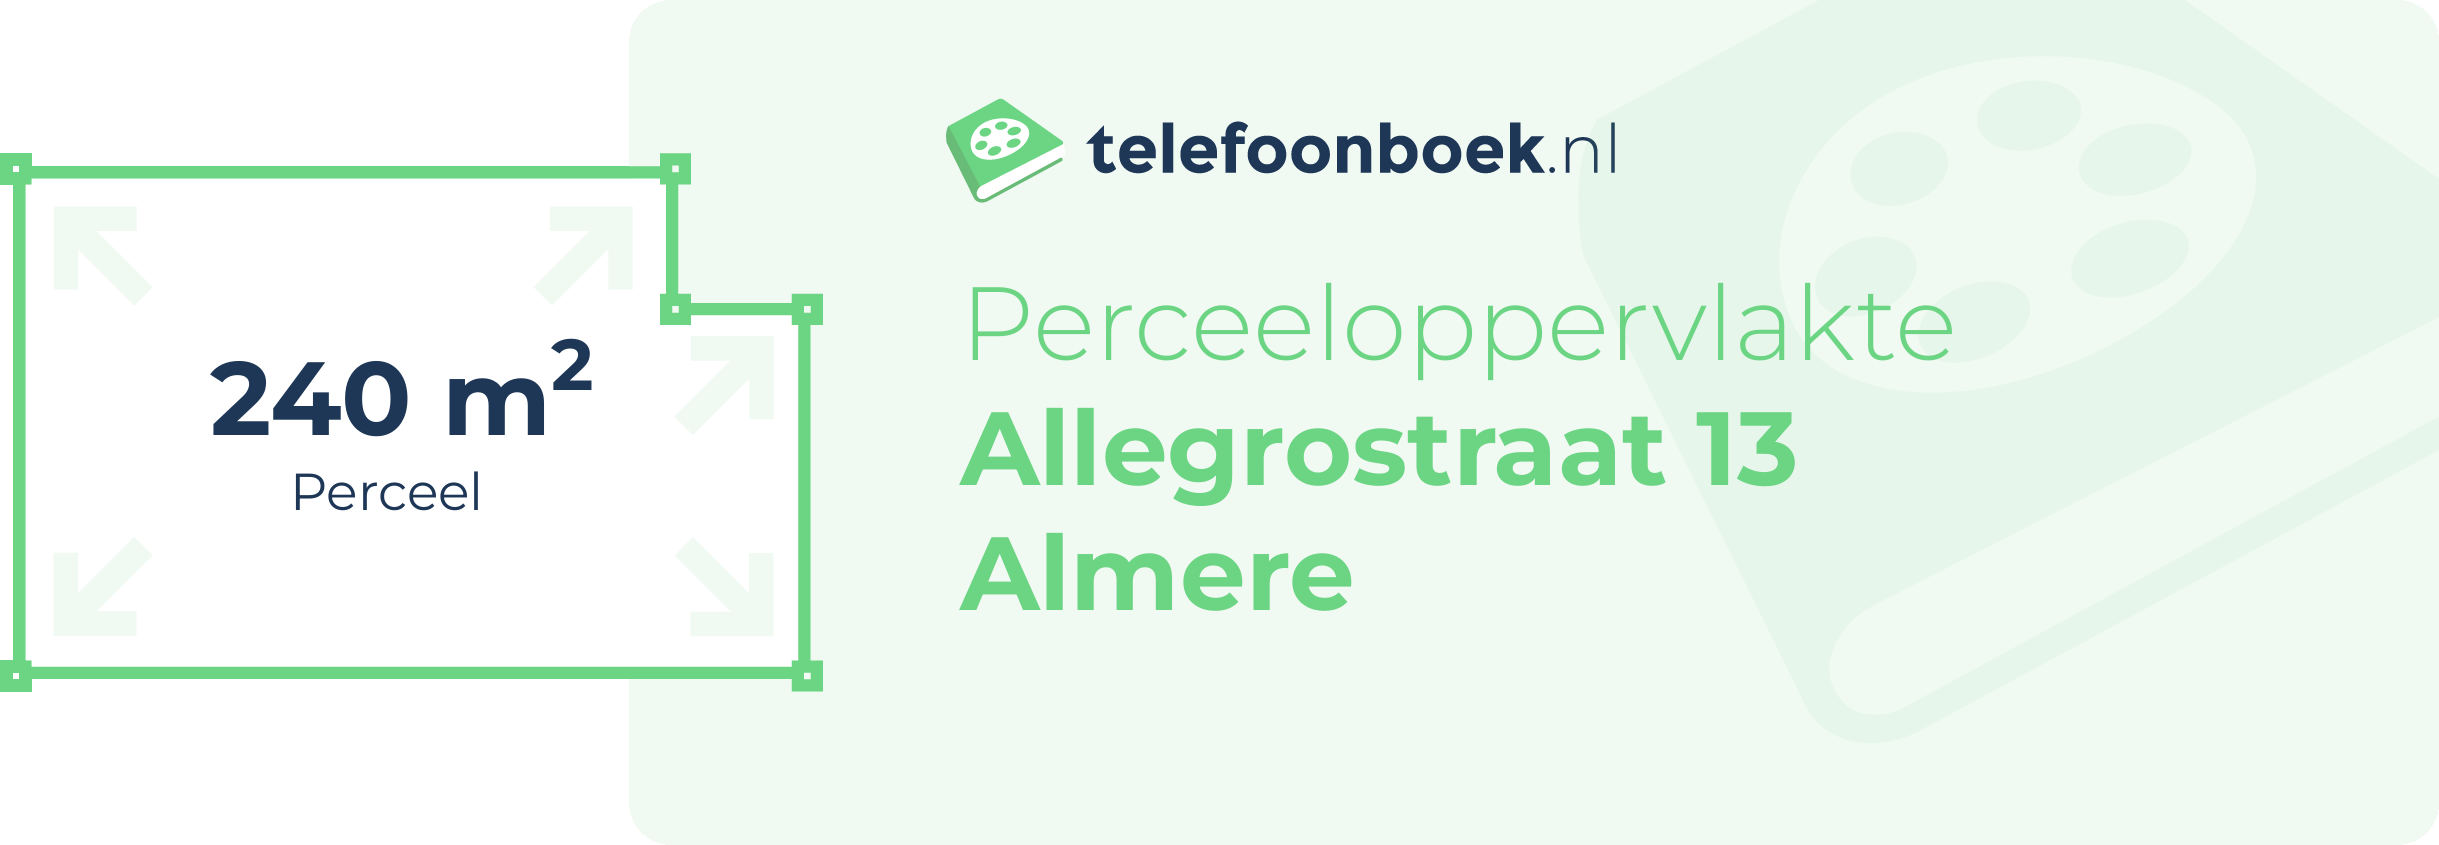 Perceeloppervlakte Allegrostraat 13 Almere